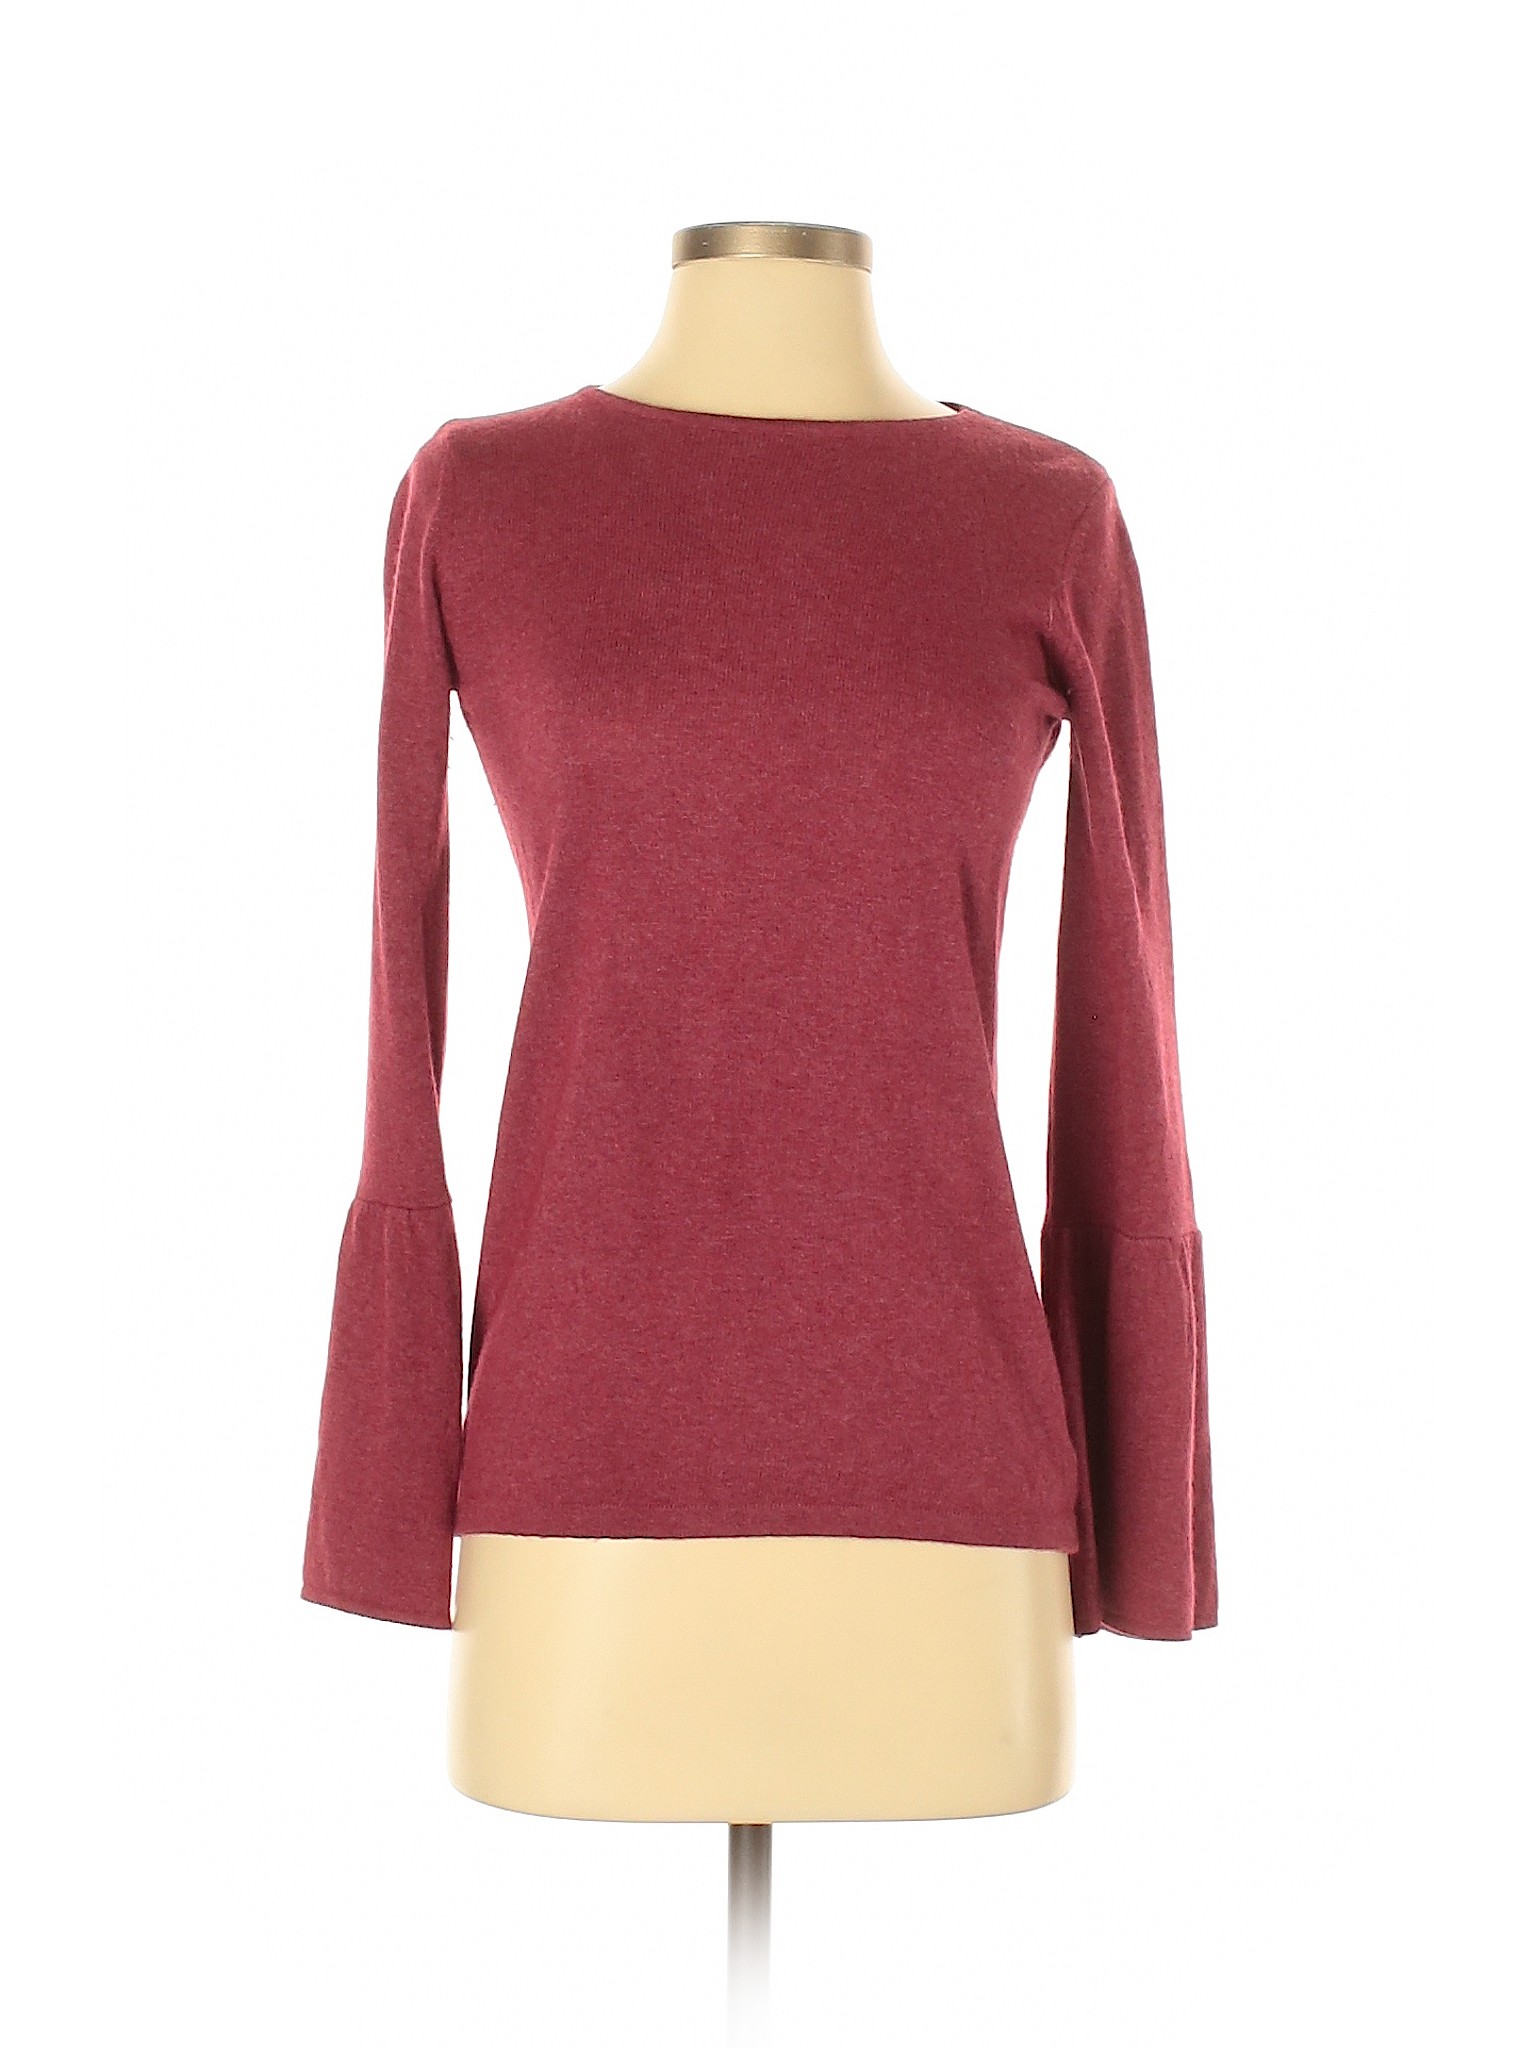 Benedetta B. Women Pink Pullover Sweater XS | eBay